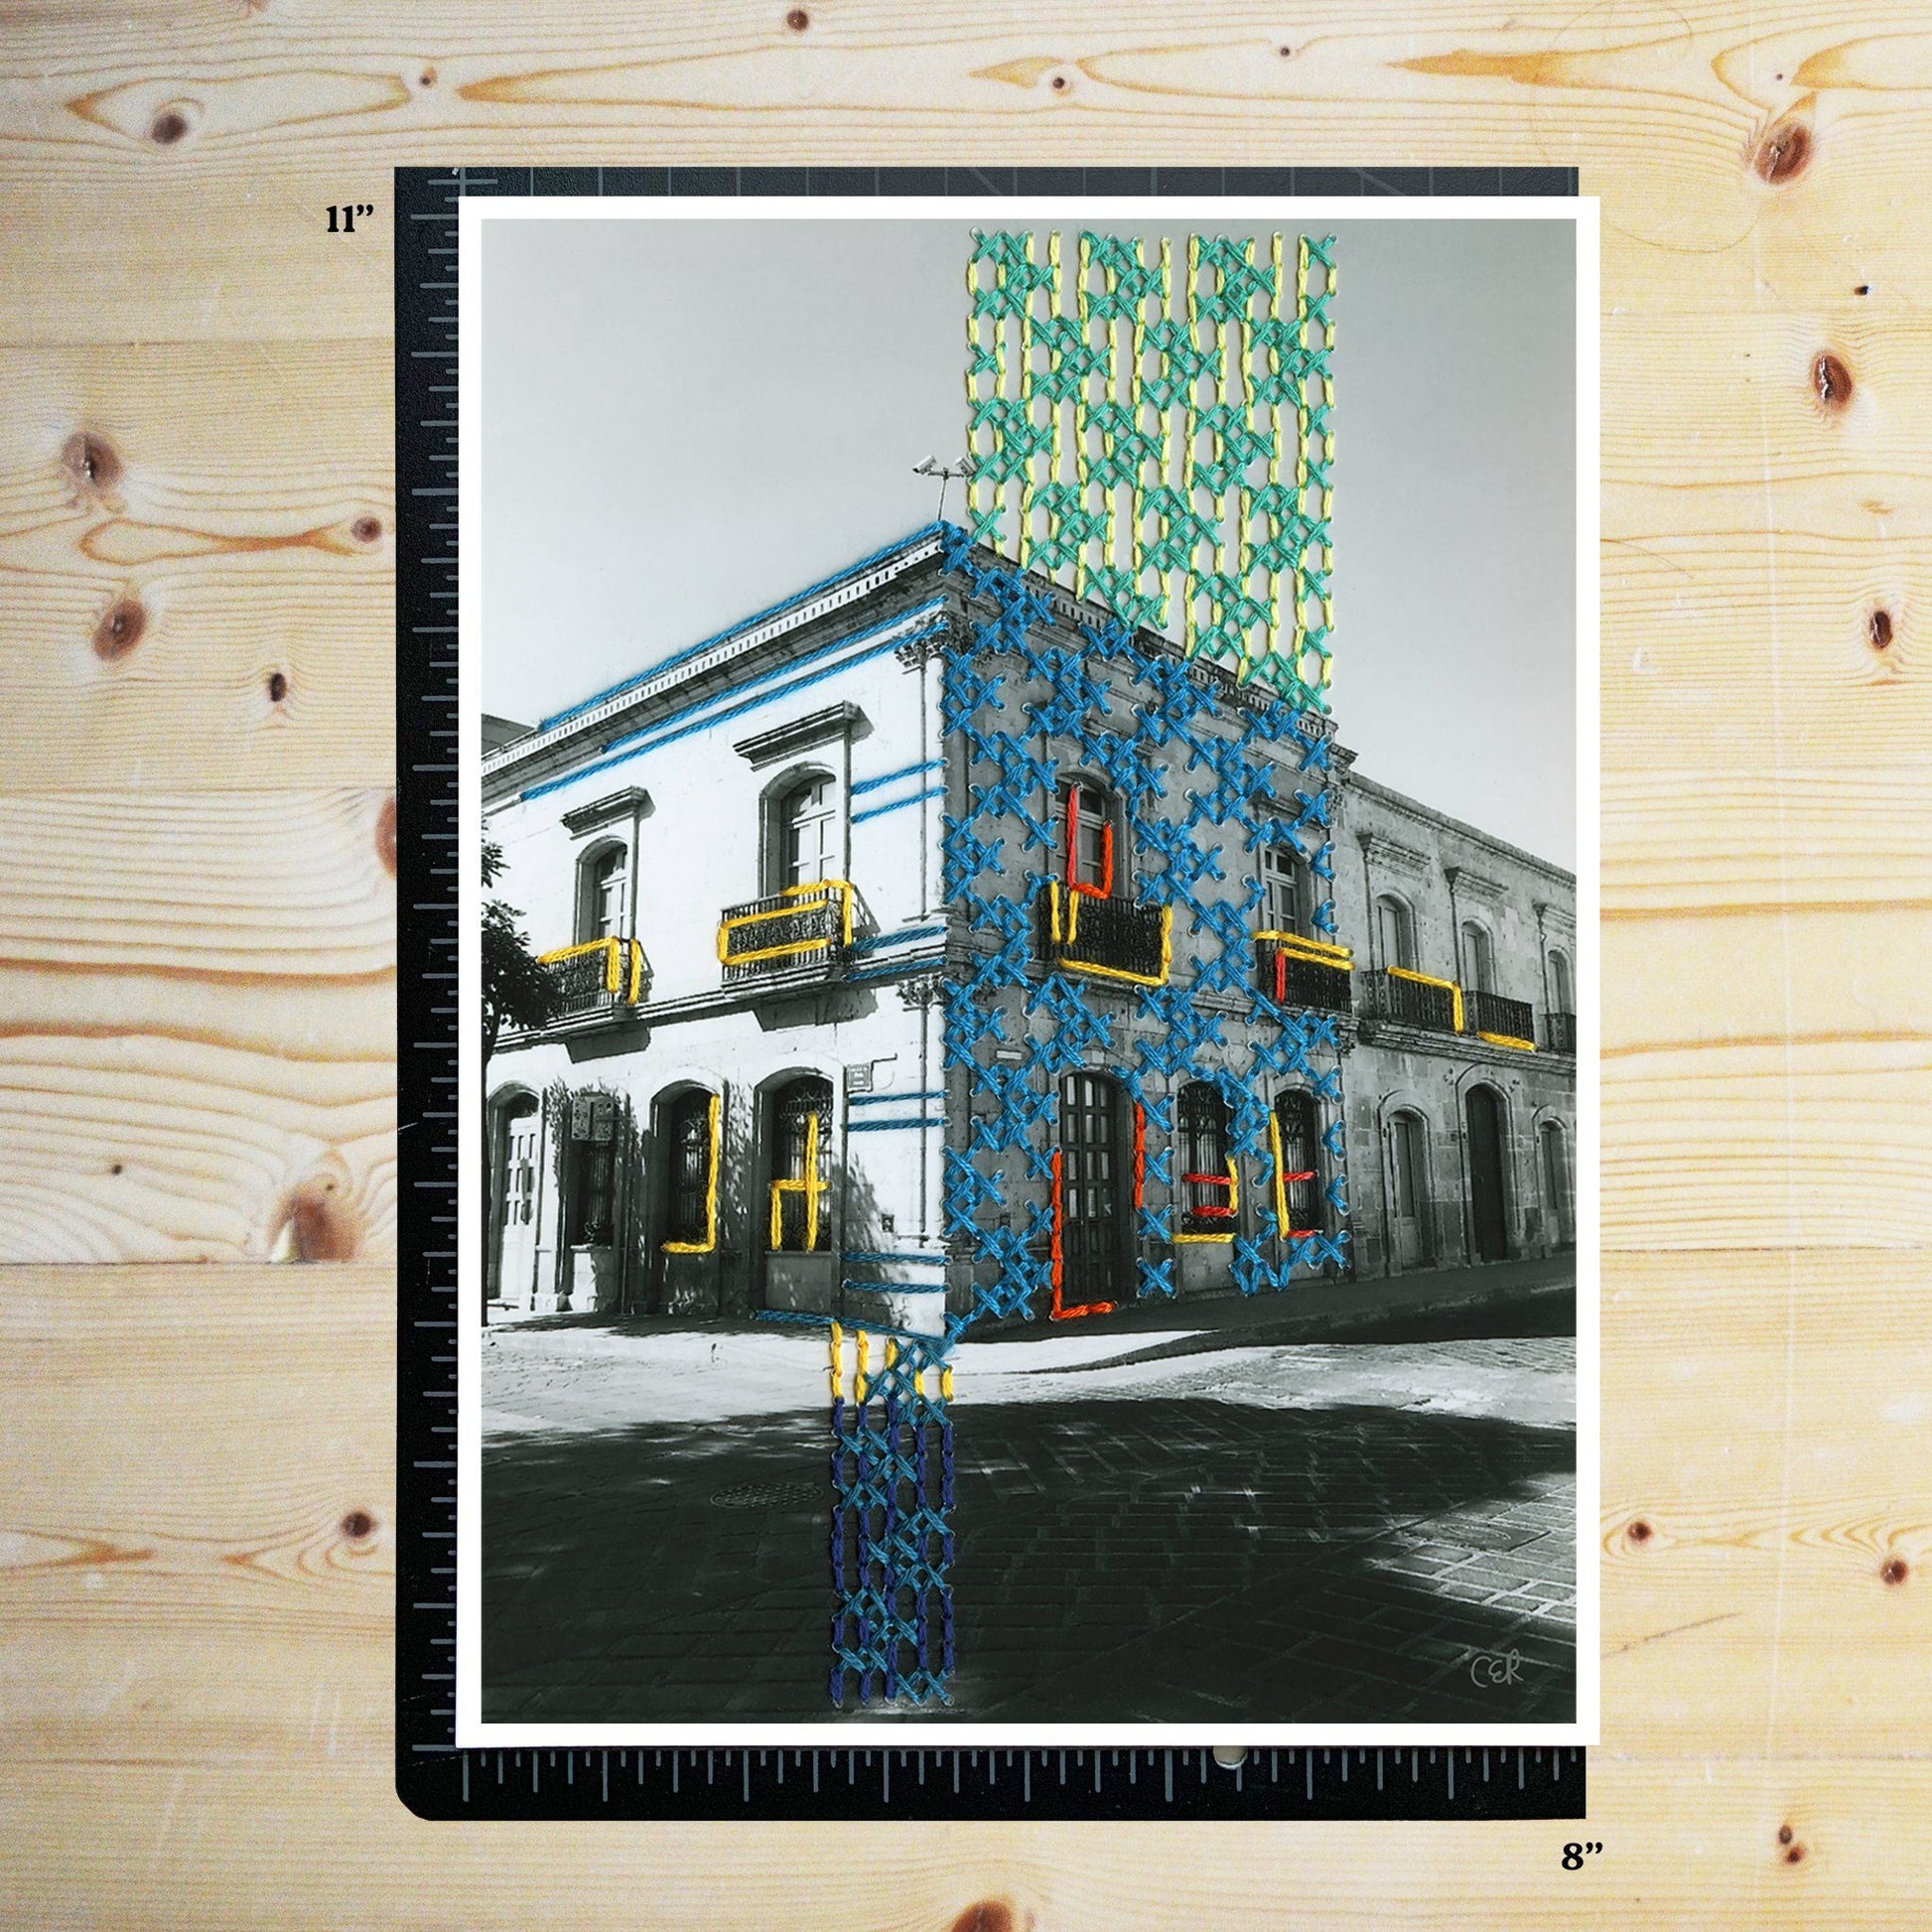 Cross stitch cross street: Hand embroidery art print - Catalina Escallon